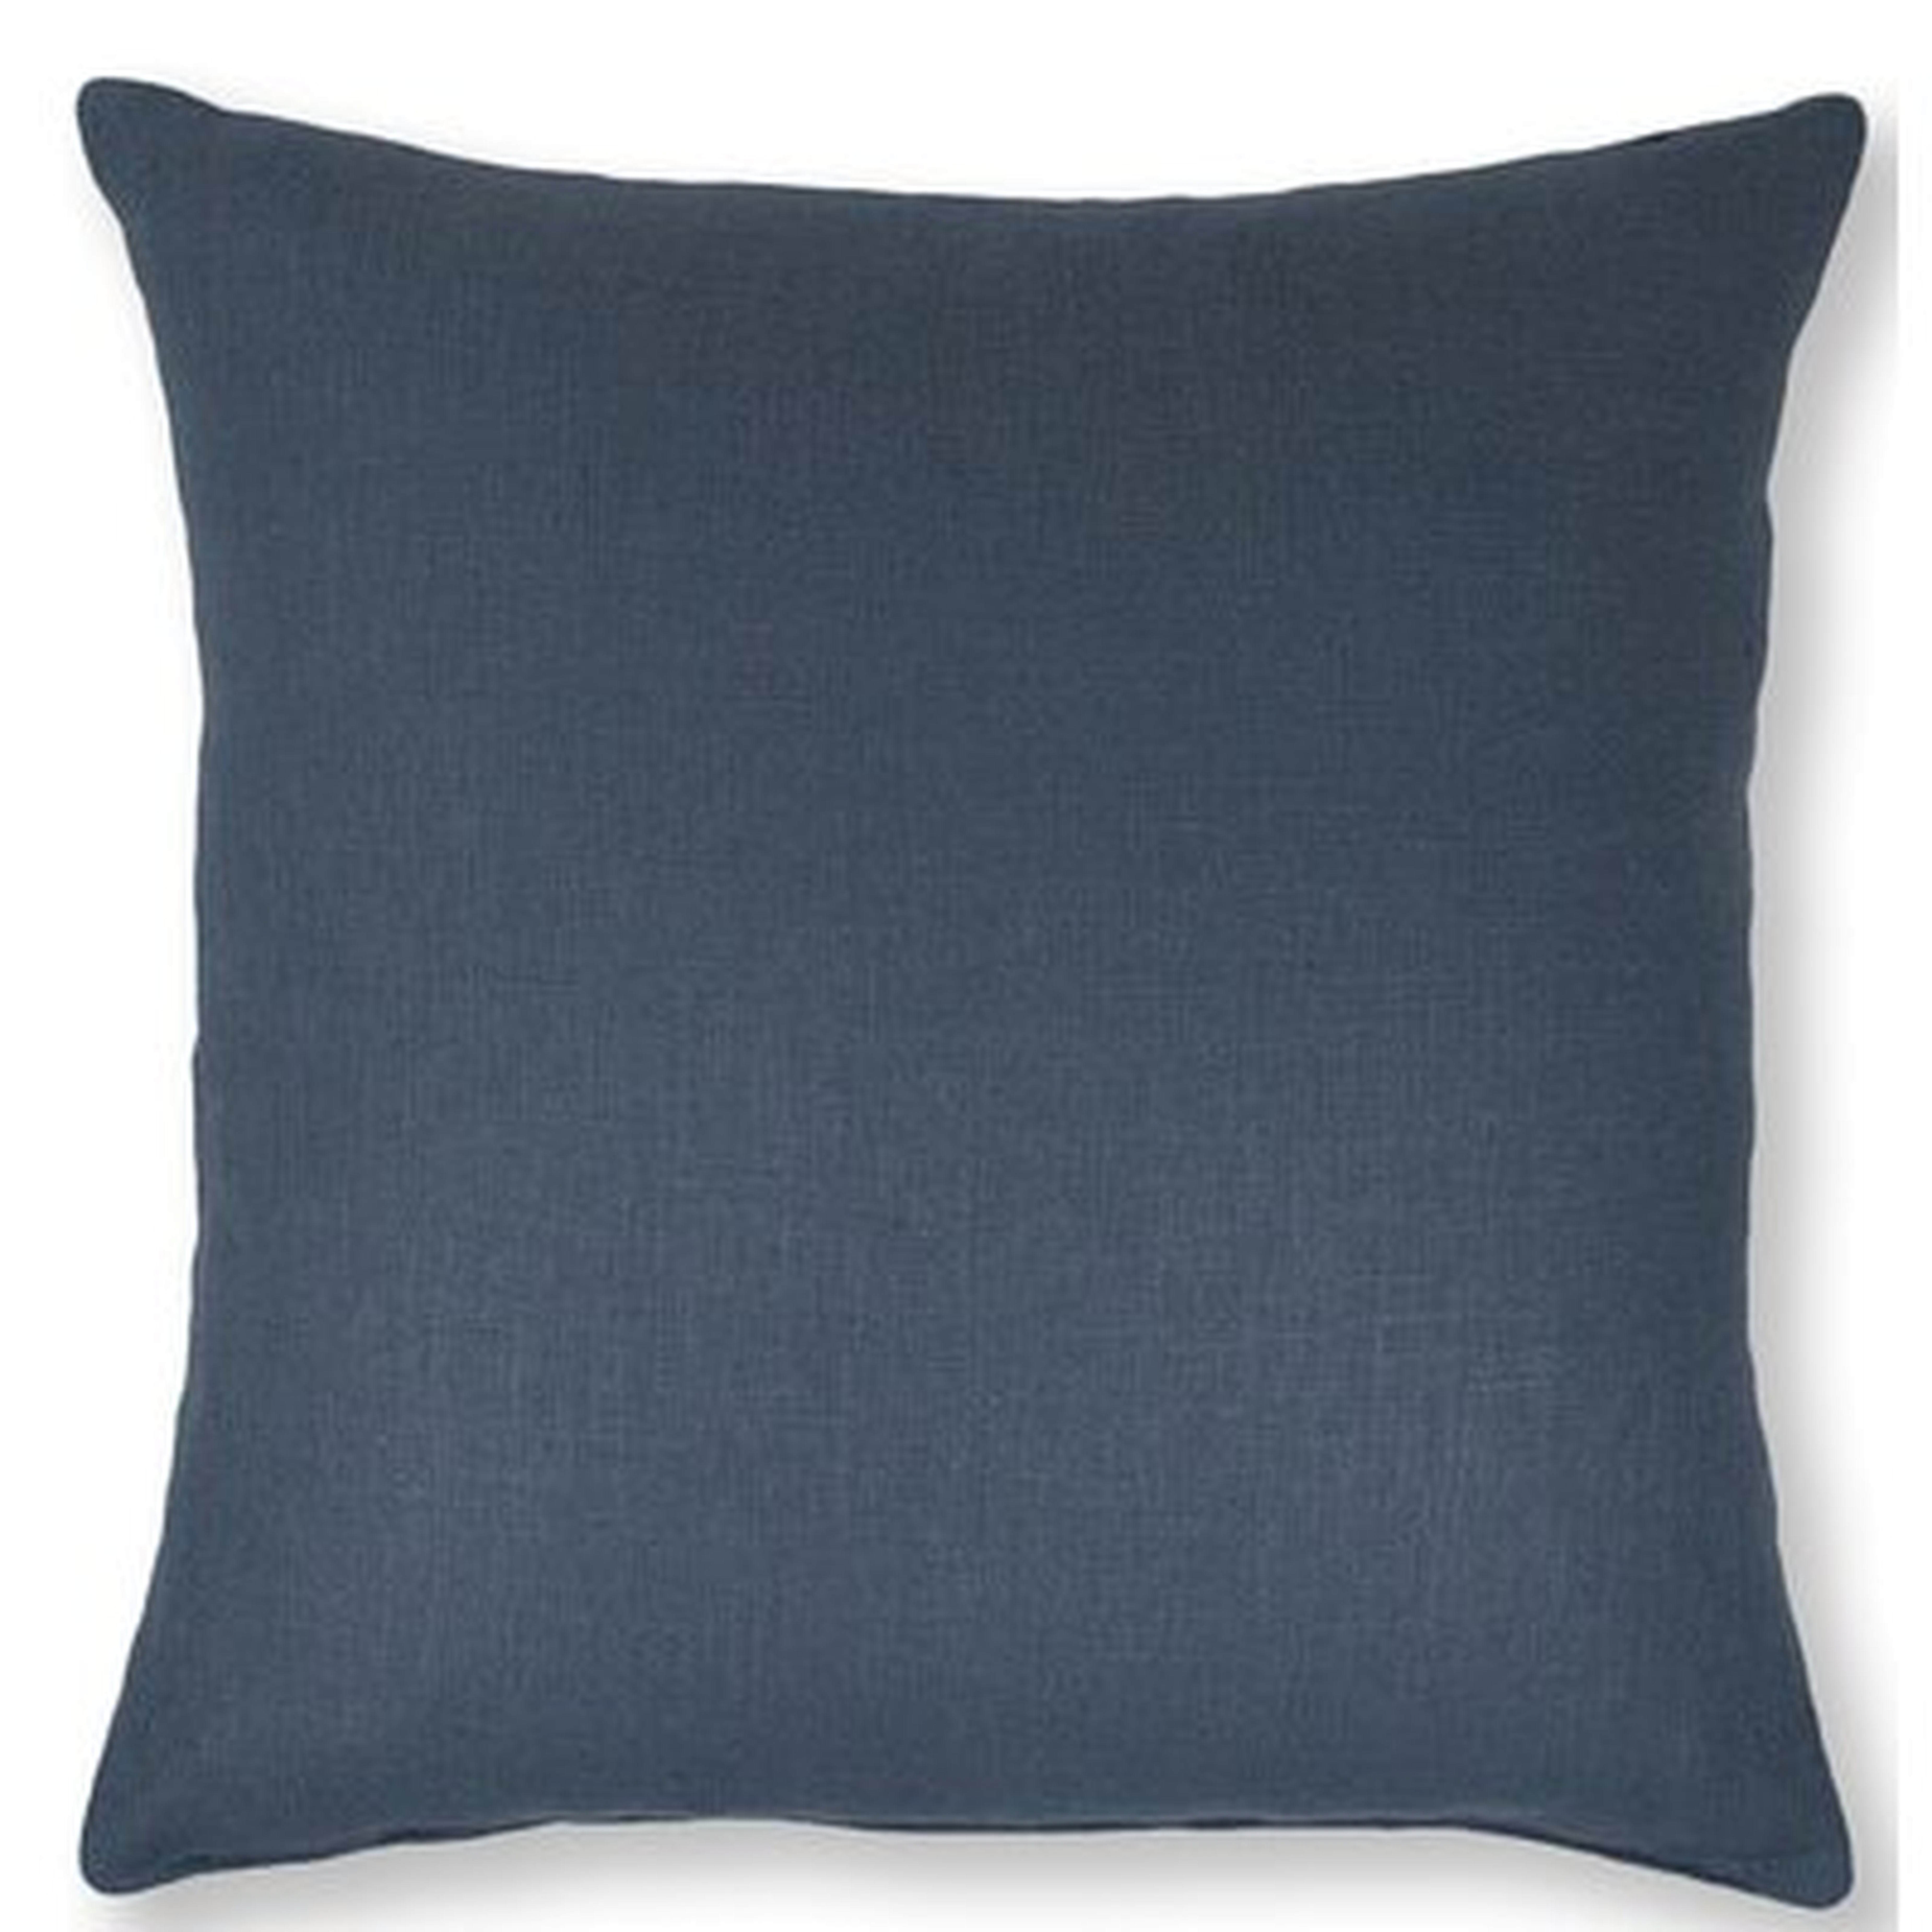 Breakwater Bay Ambler 22-inch Solid Blue Pillow - Wayfair